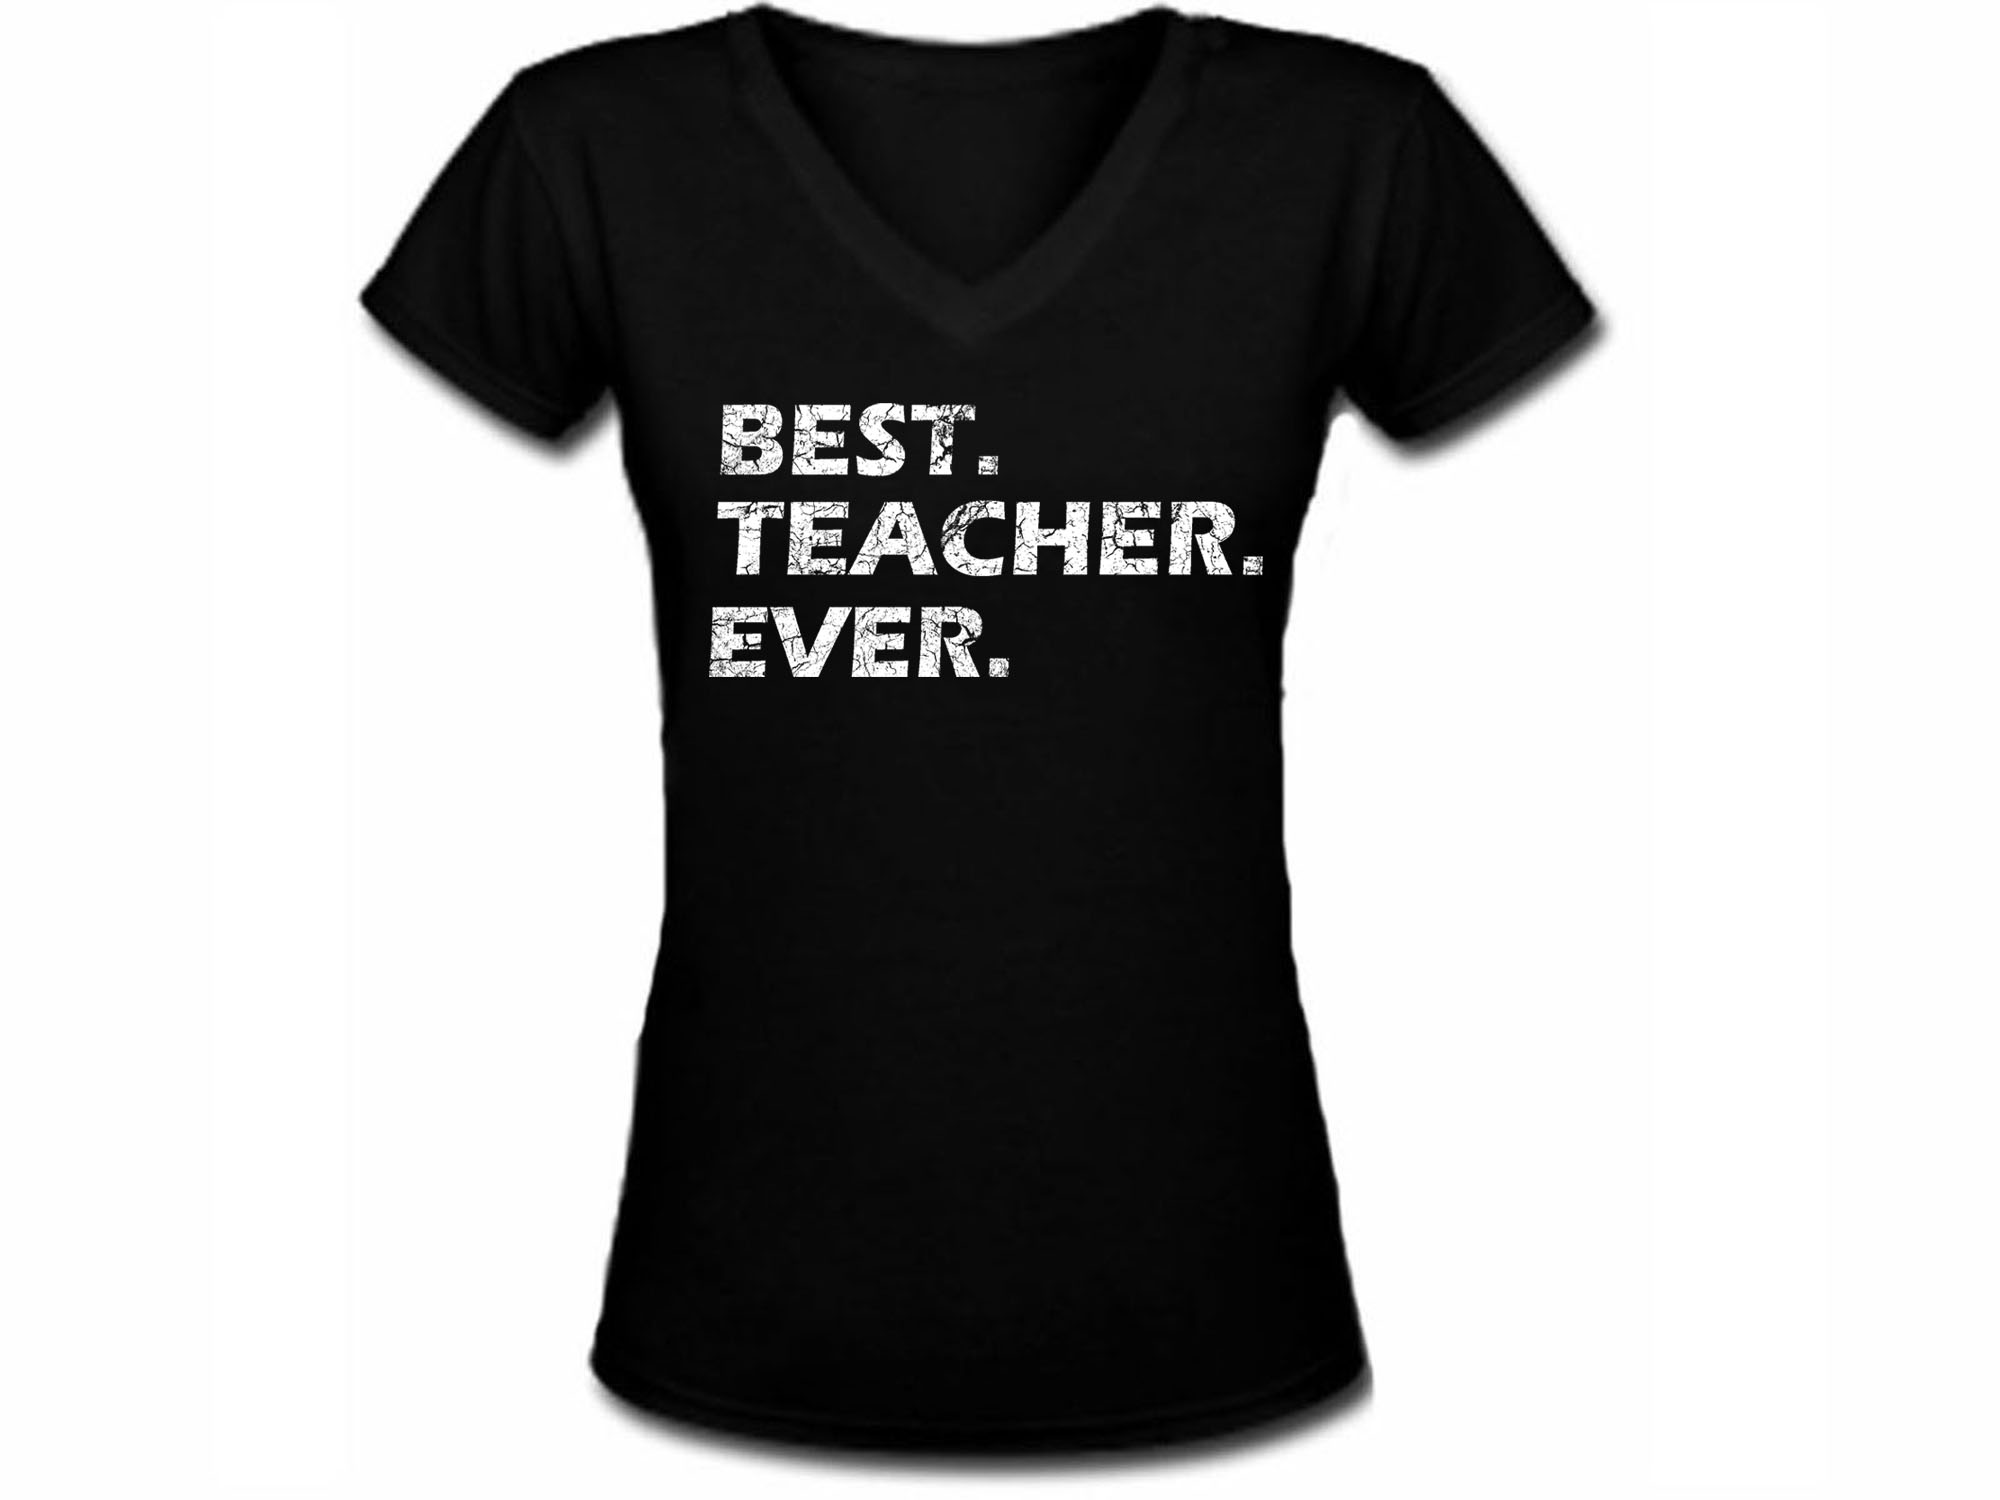 Best teacher ever women v neck black top shirt